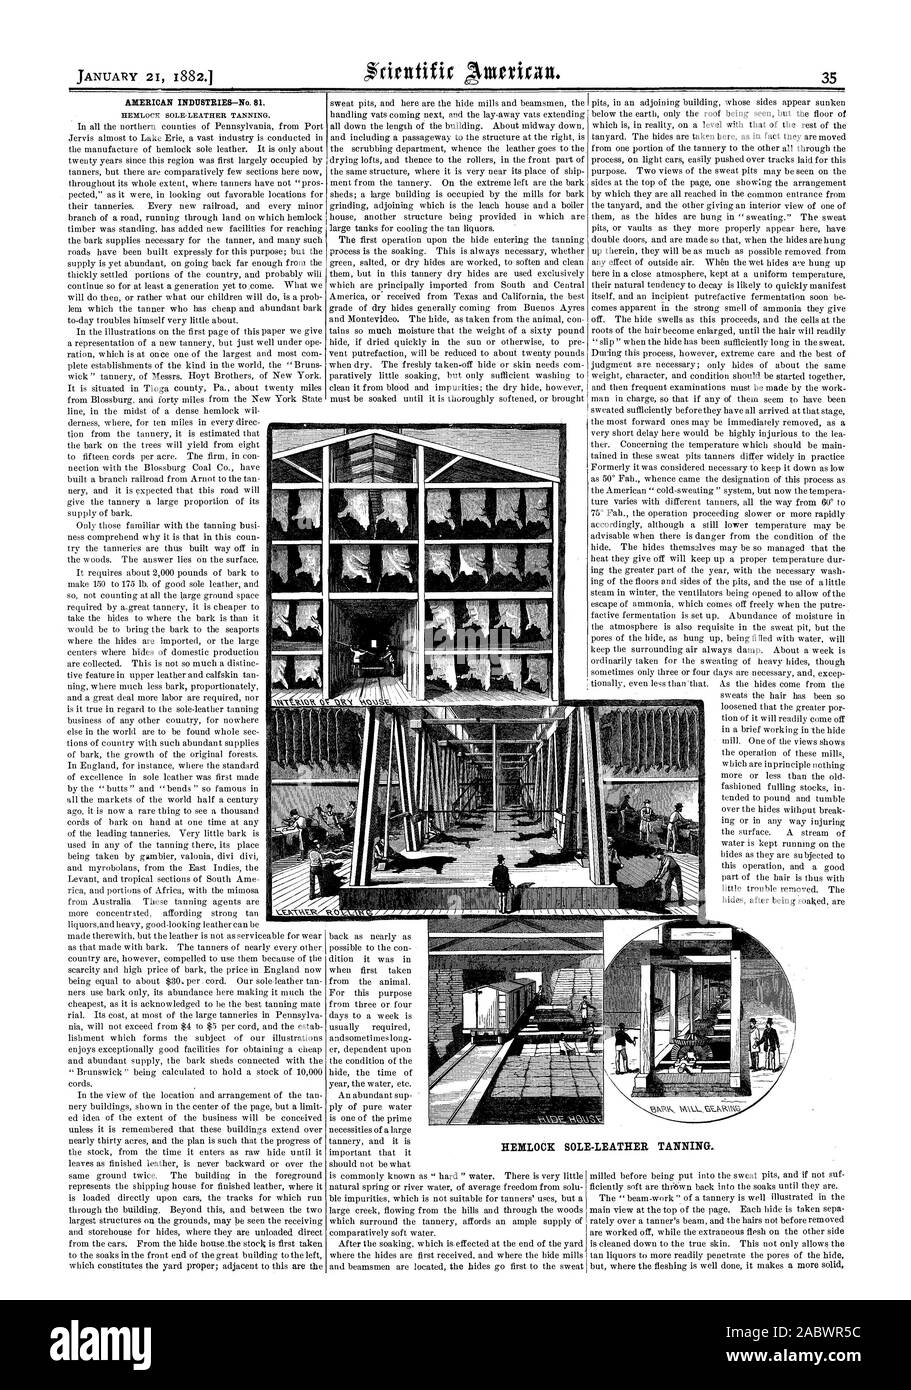 AMERICAN INDUSTRIES—No. 81. HEMLOCK SOLE-LEATHER TANNING., scientific american, 1882-01-21 Stock Photo